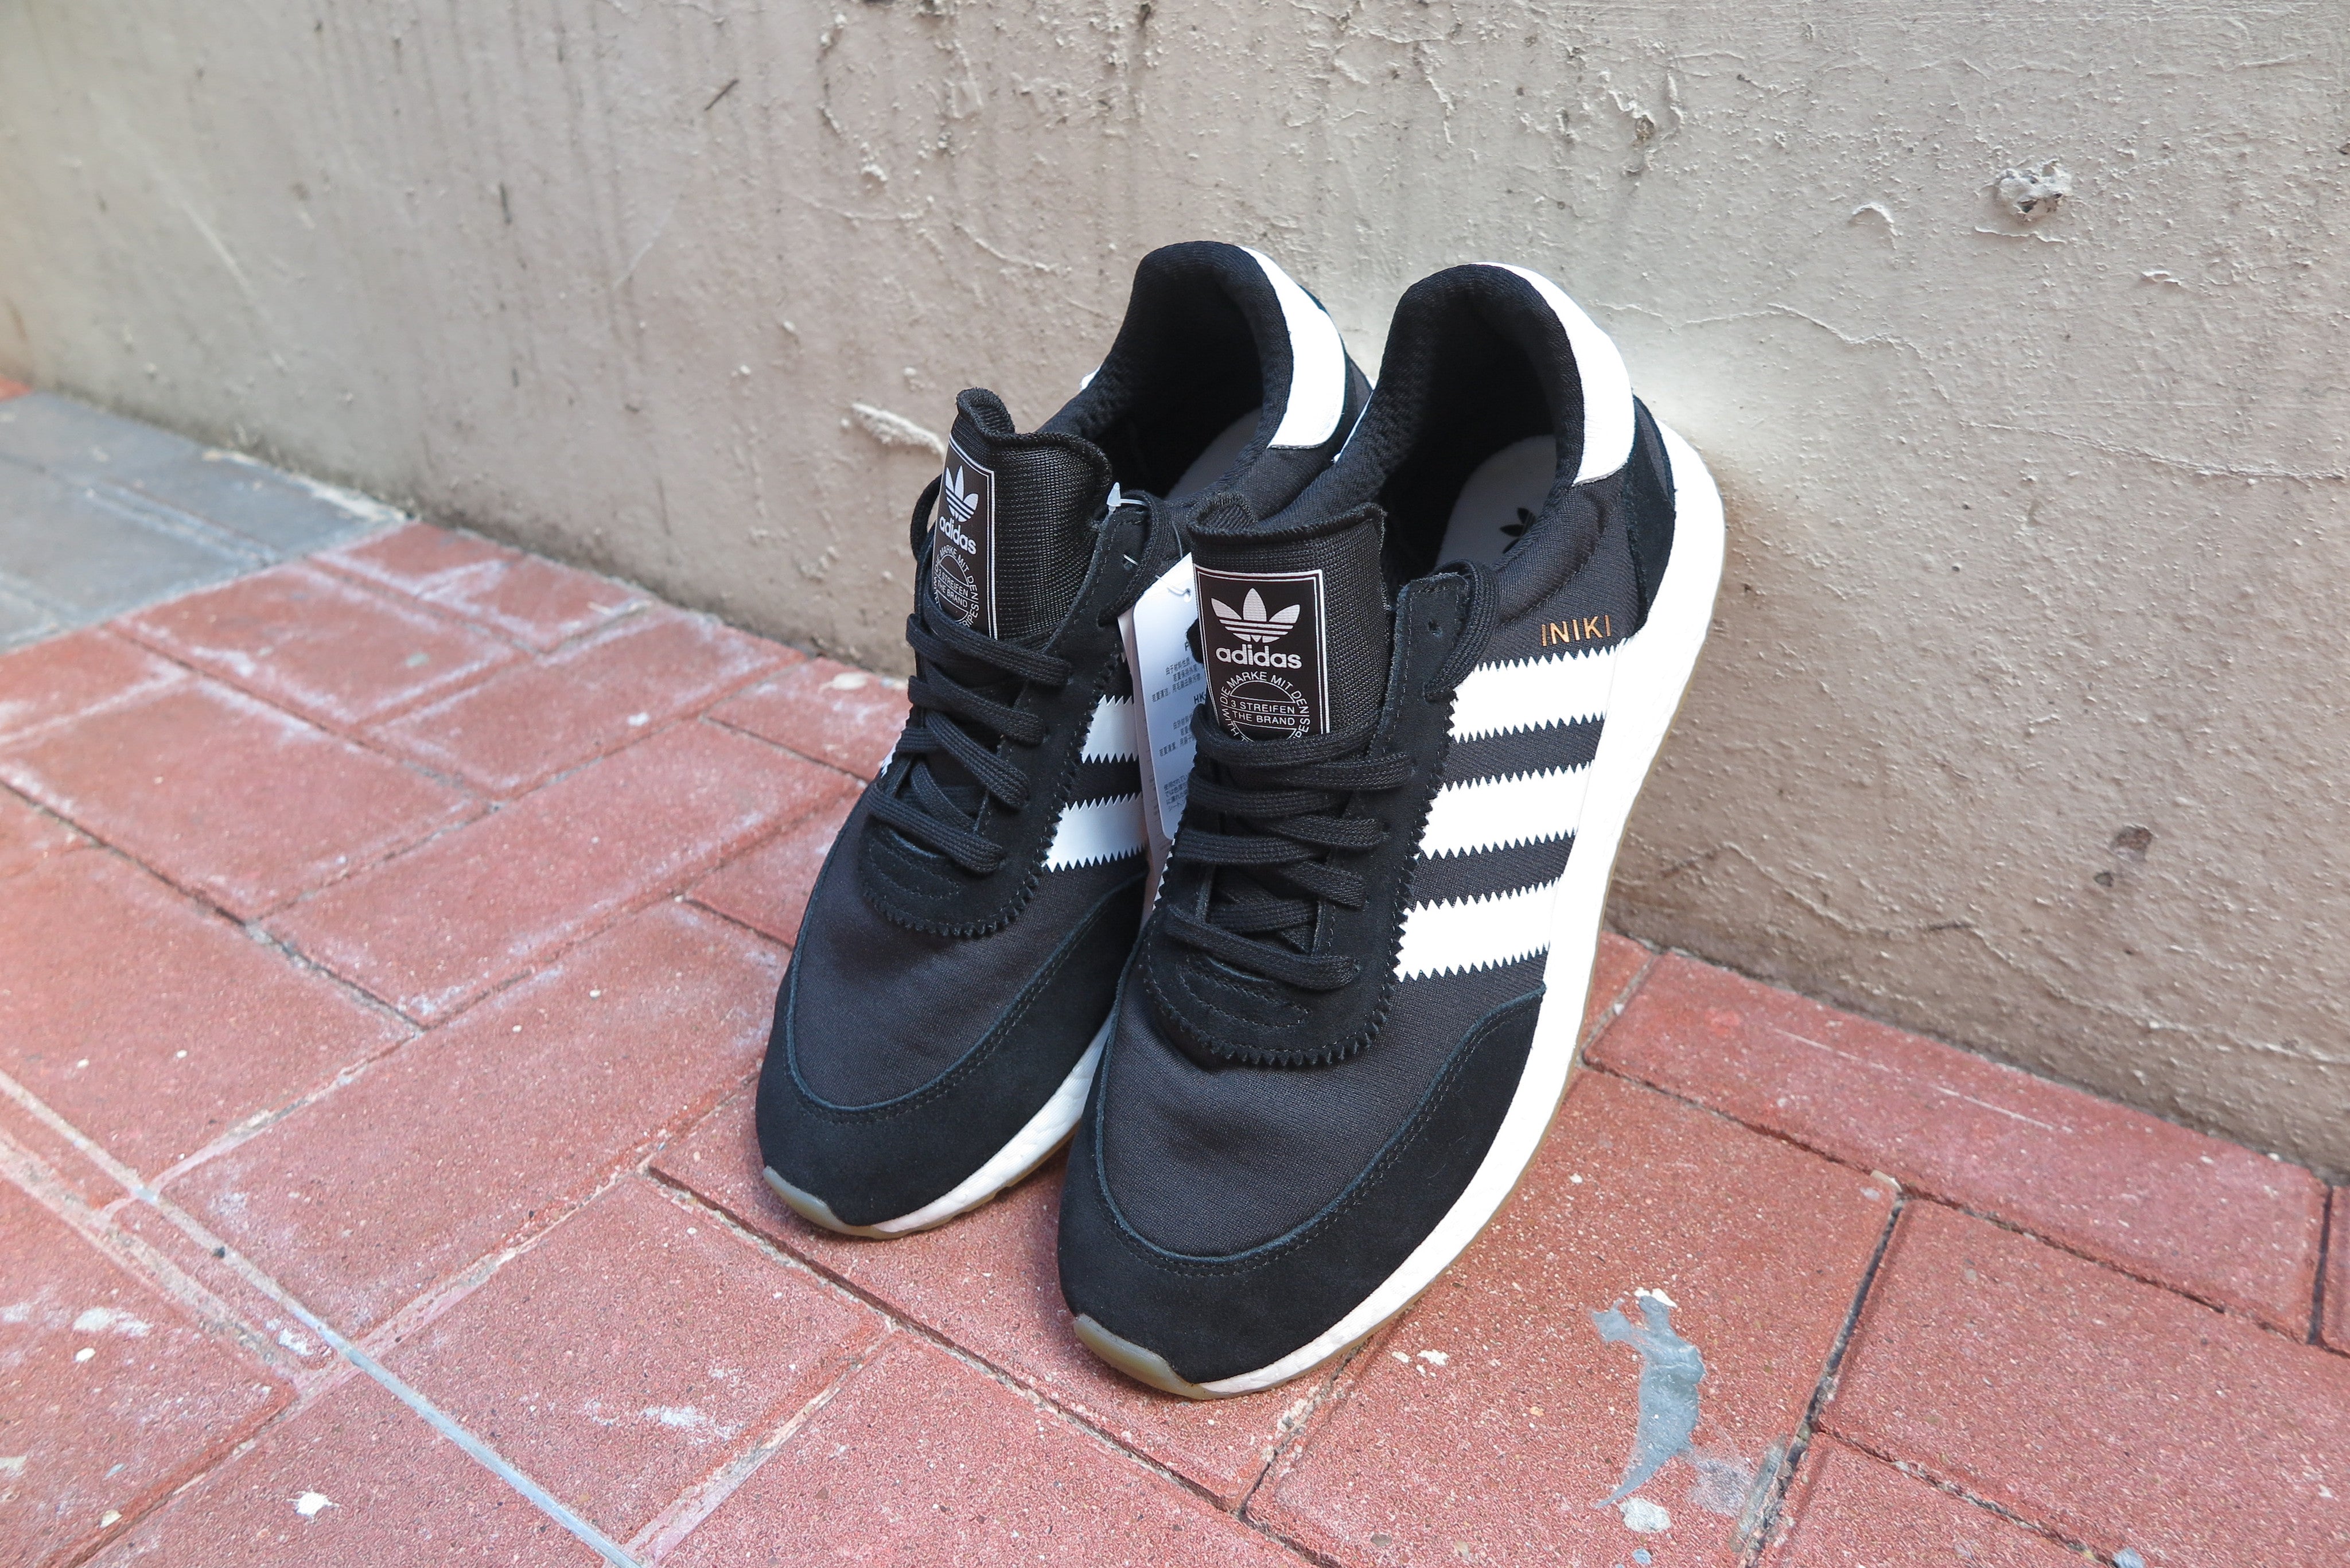 adidas I-5923(Iniki Runner Boost) - Core Black/Footwear White/Gum #BY9